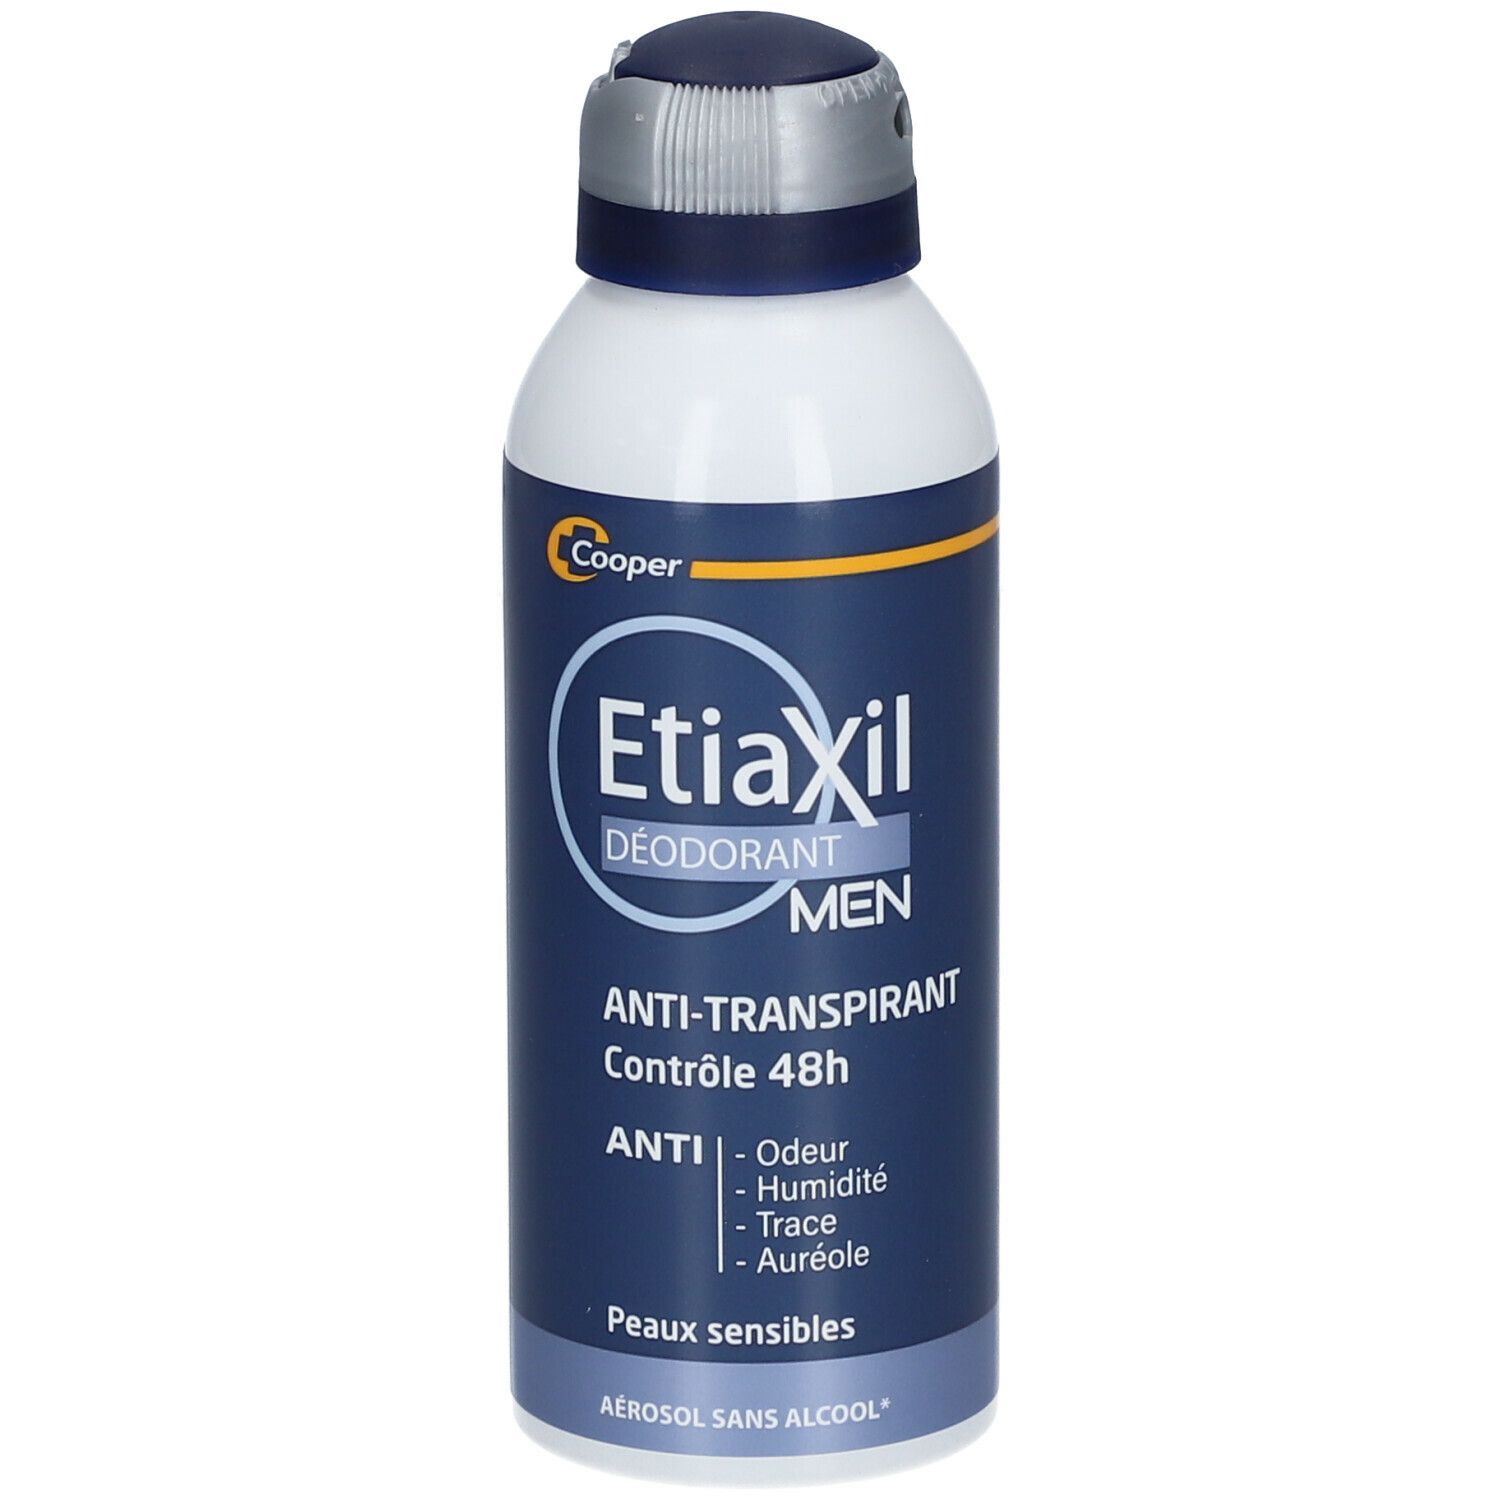 EtiaXil Déodorant Men Antitranspirant Contrôle 48h Spray